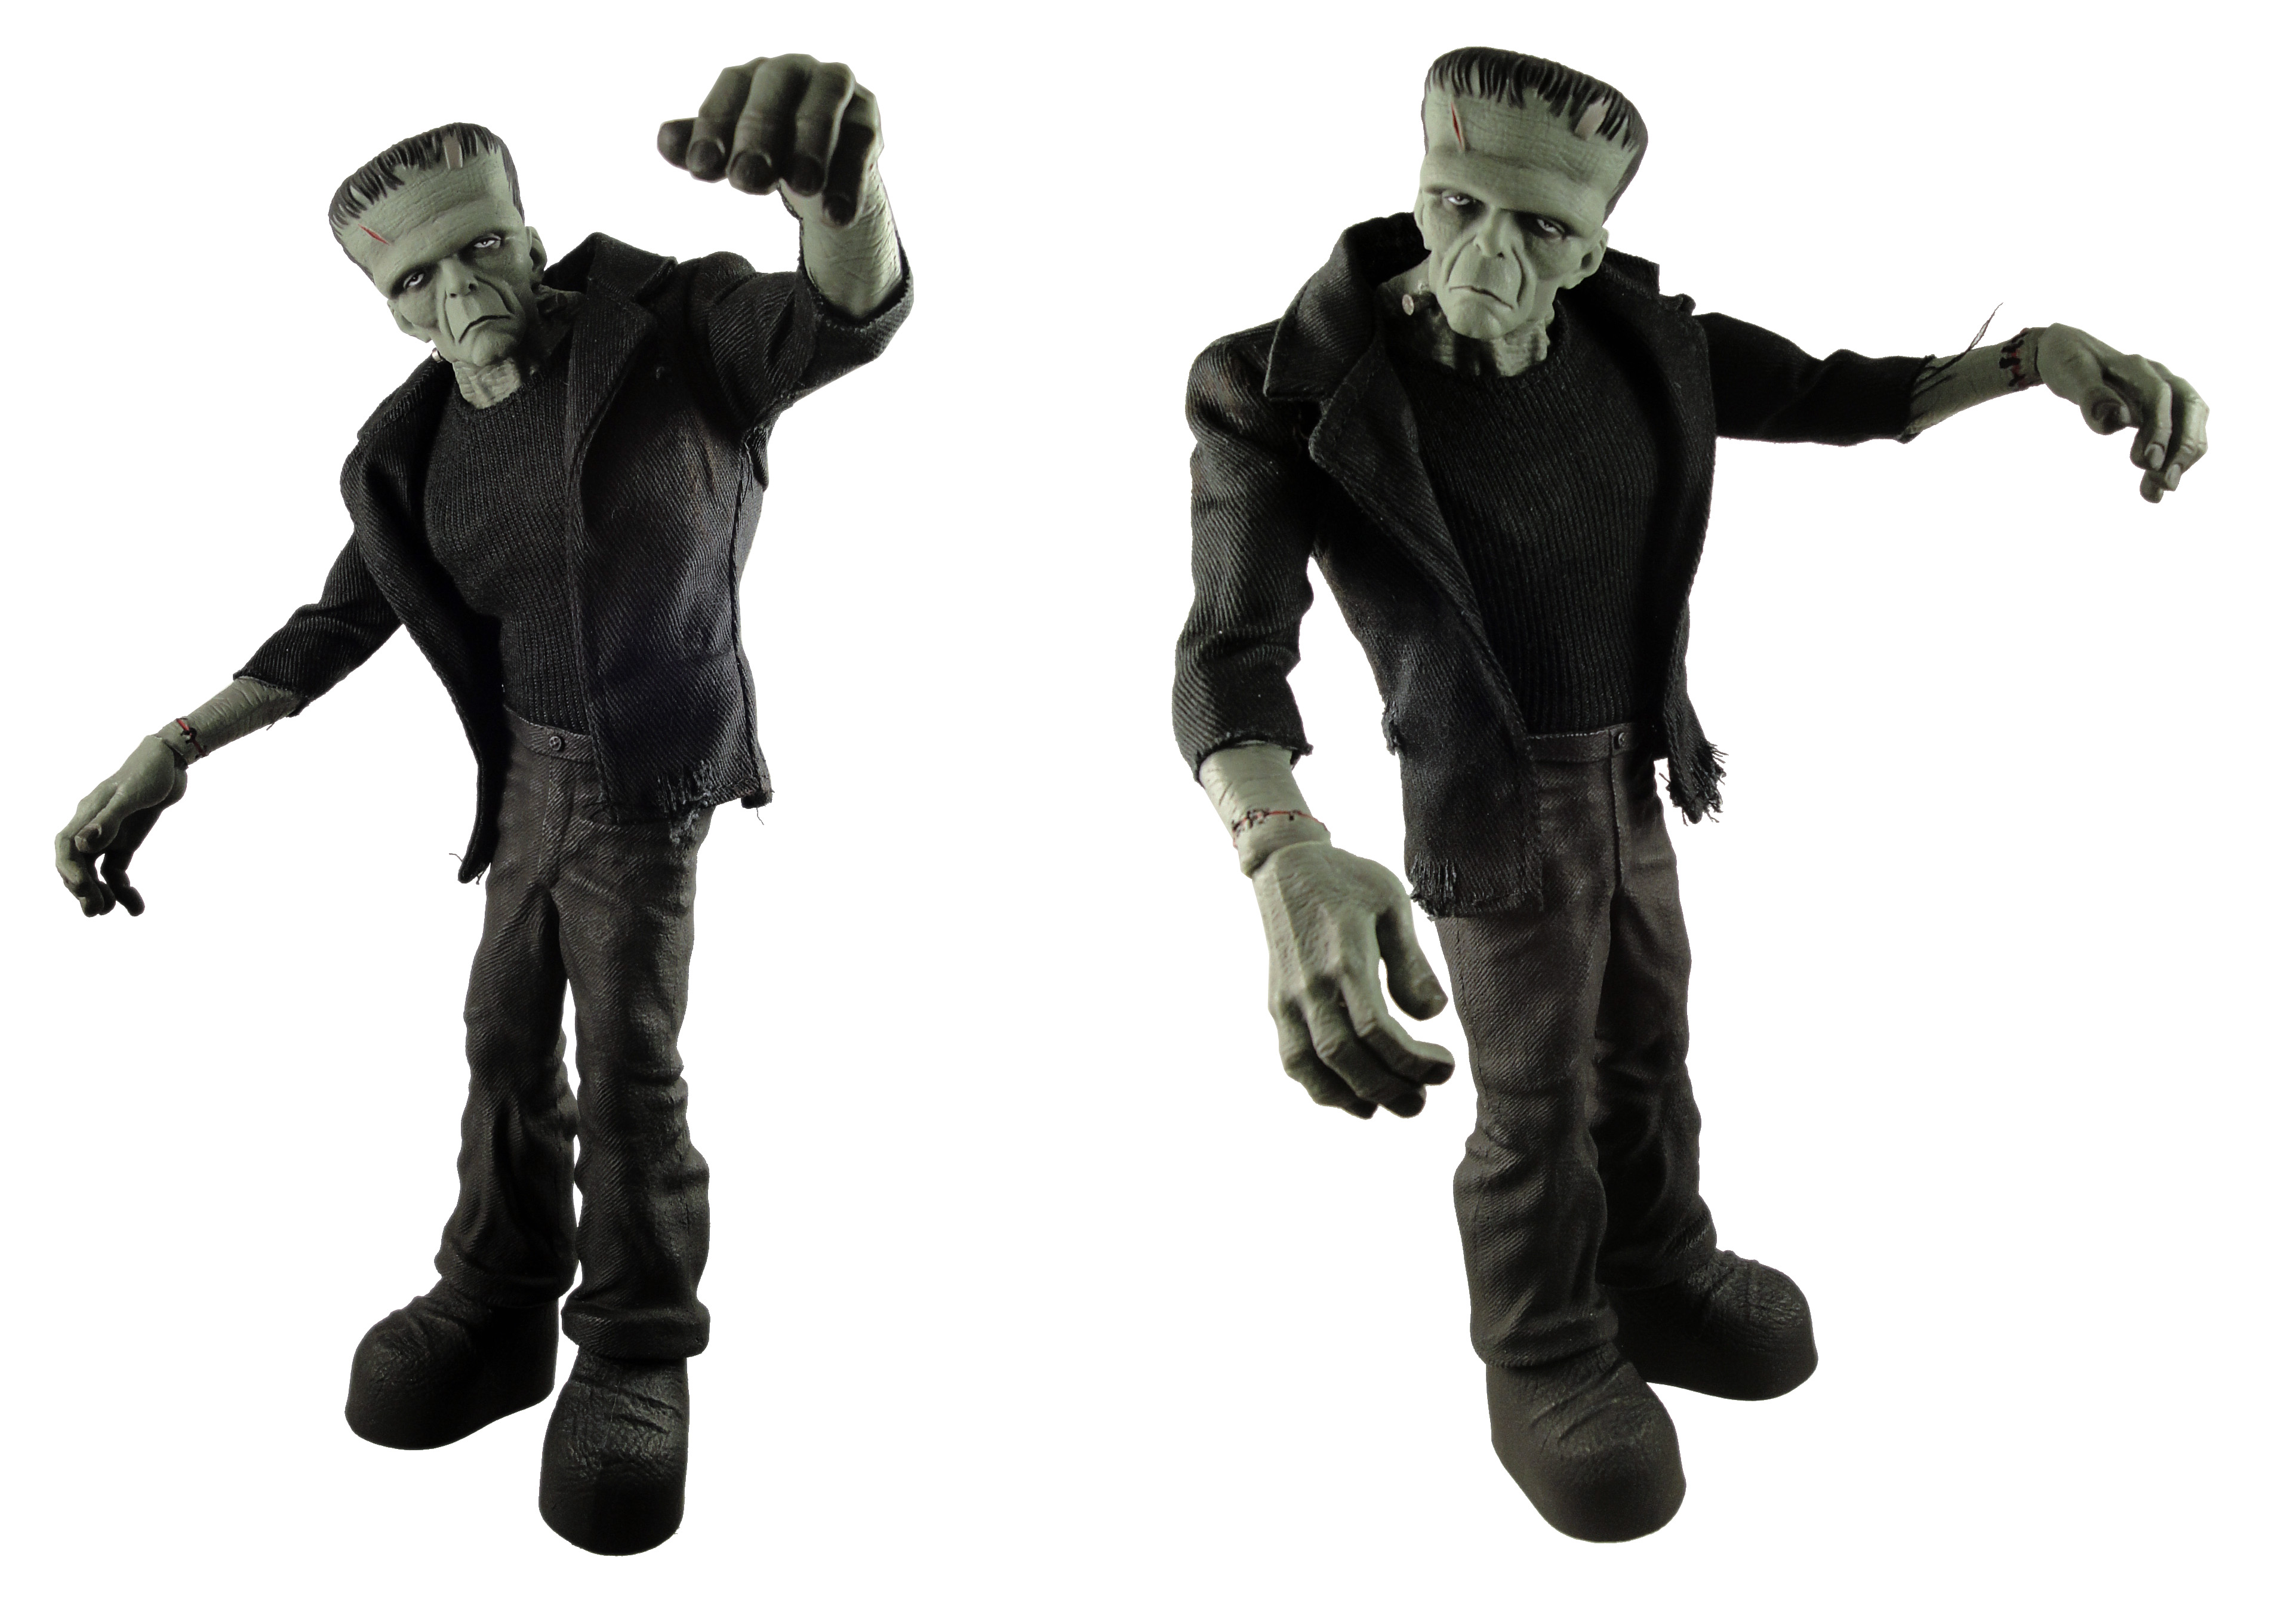 Frankenstein Collectible Figure. 